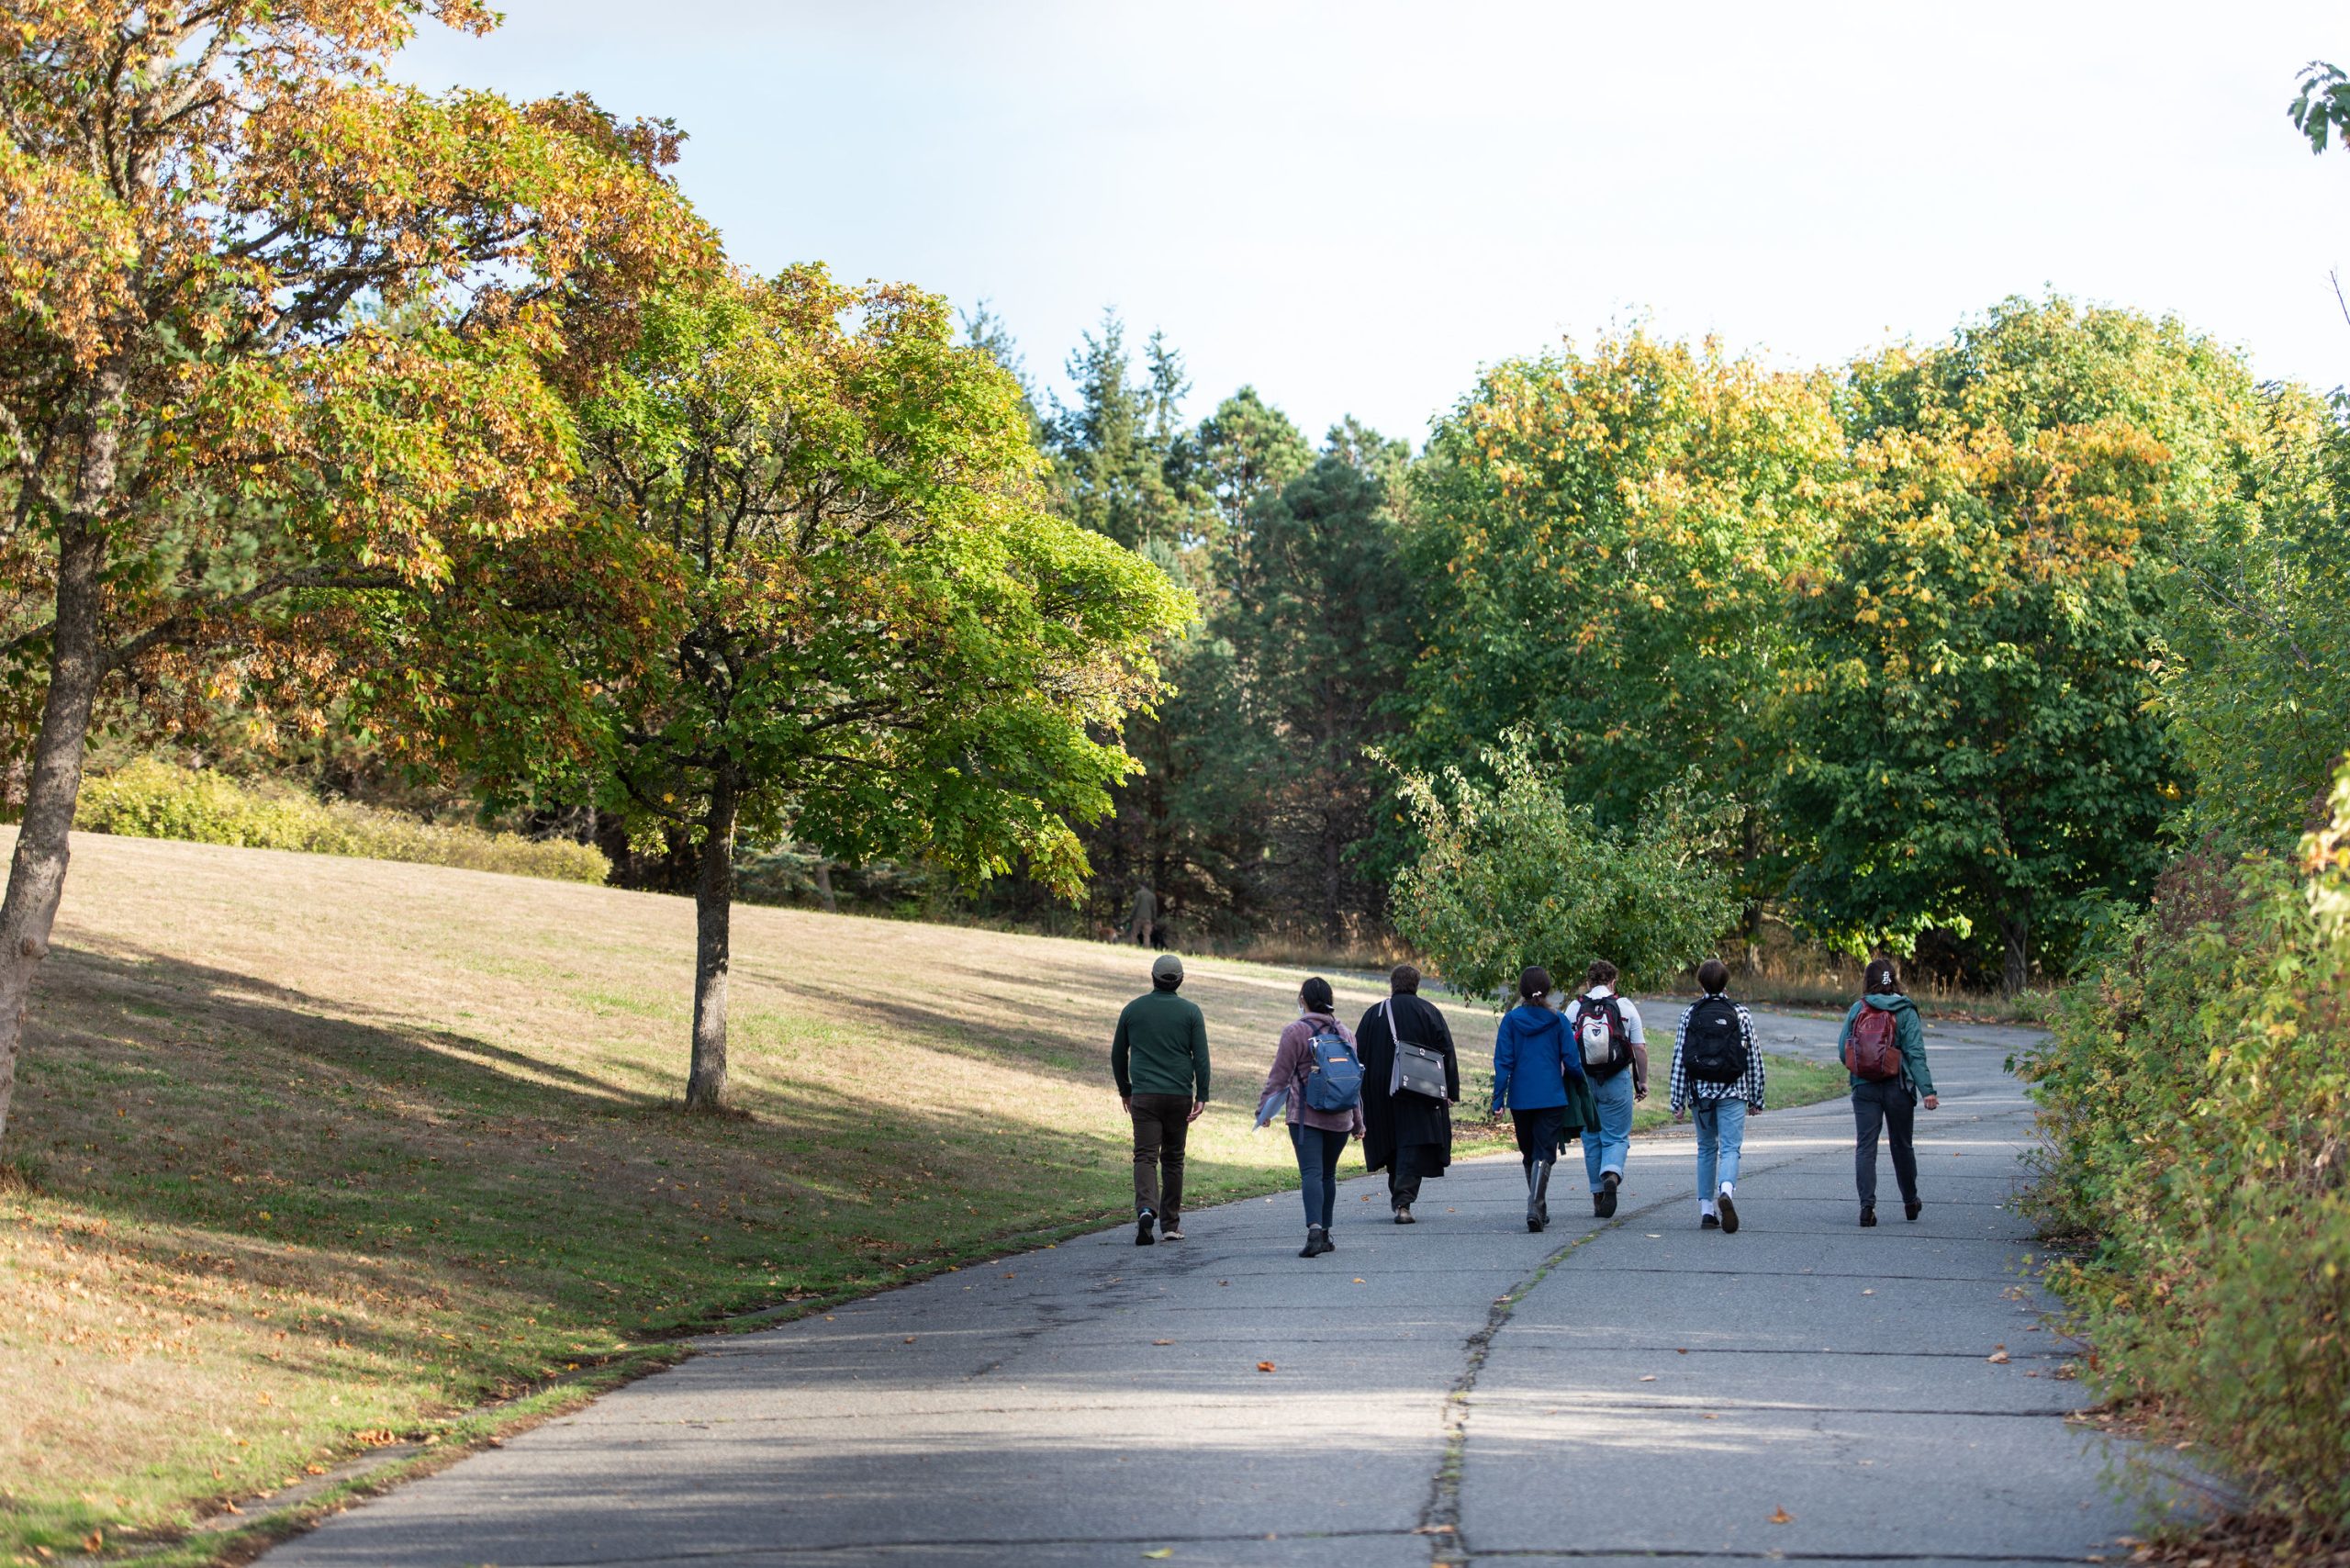 Students walking away through a park